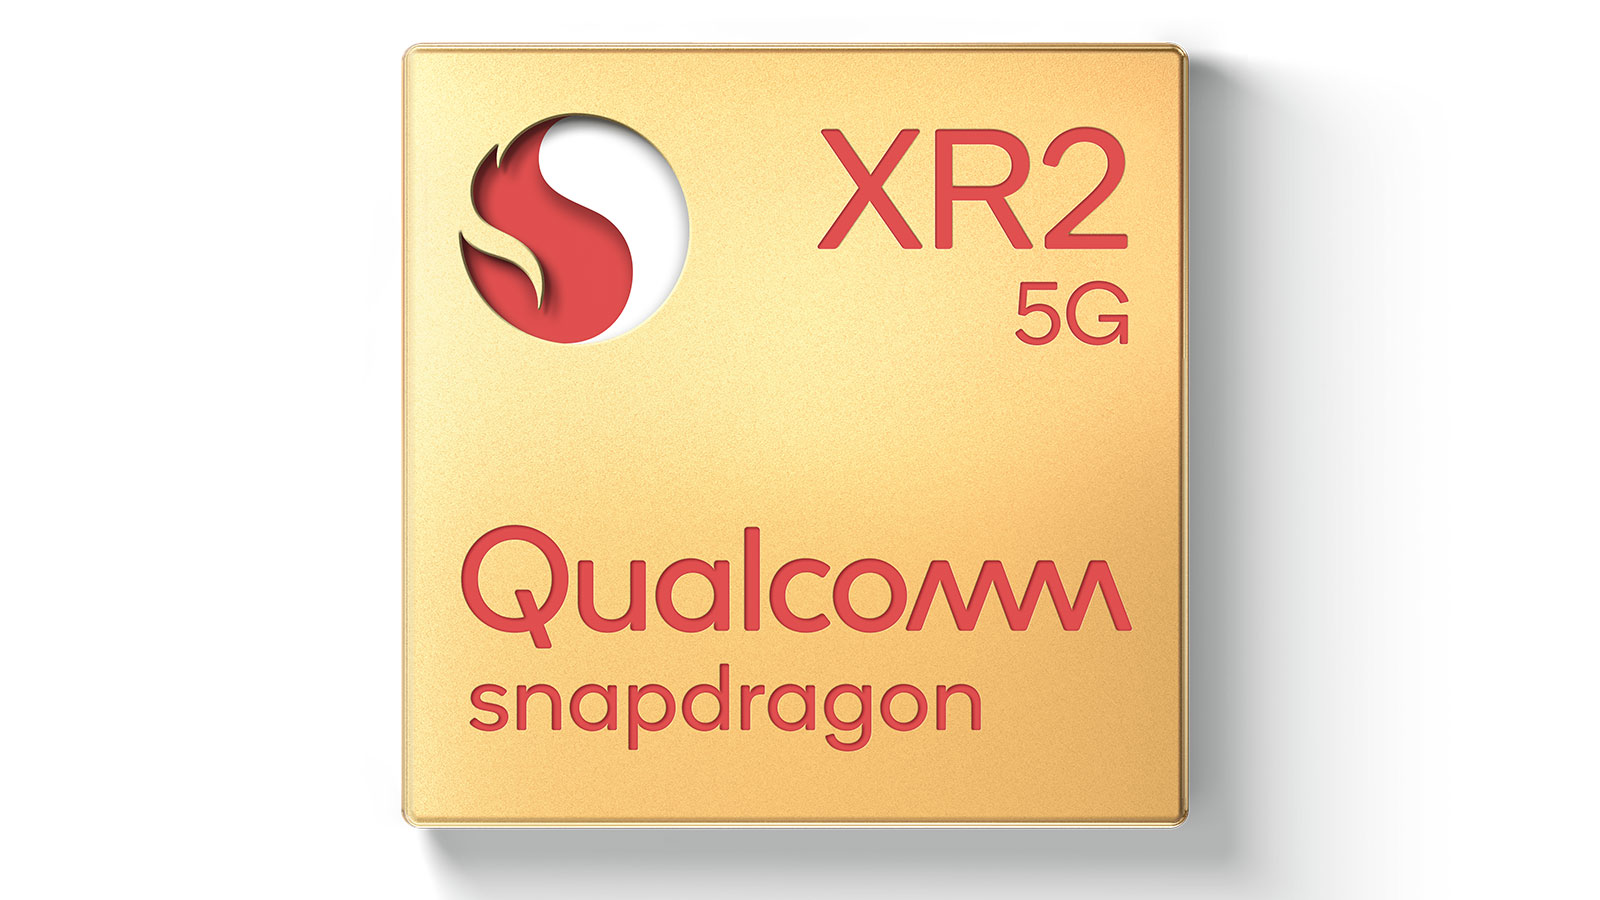 Qualcomm Snapdragon XR2 chip gold